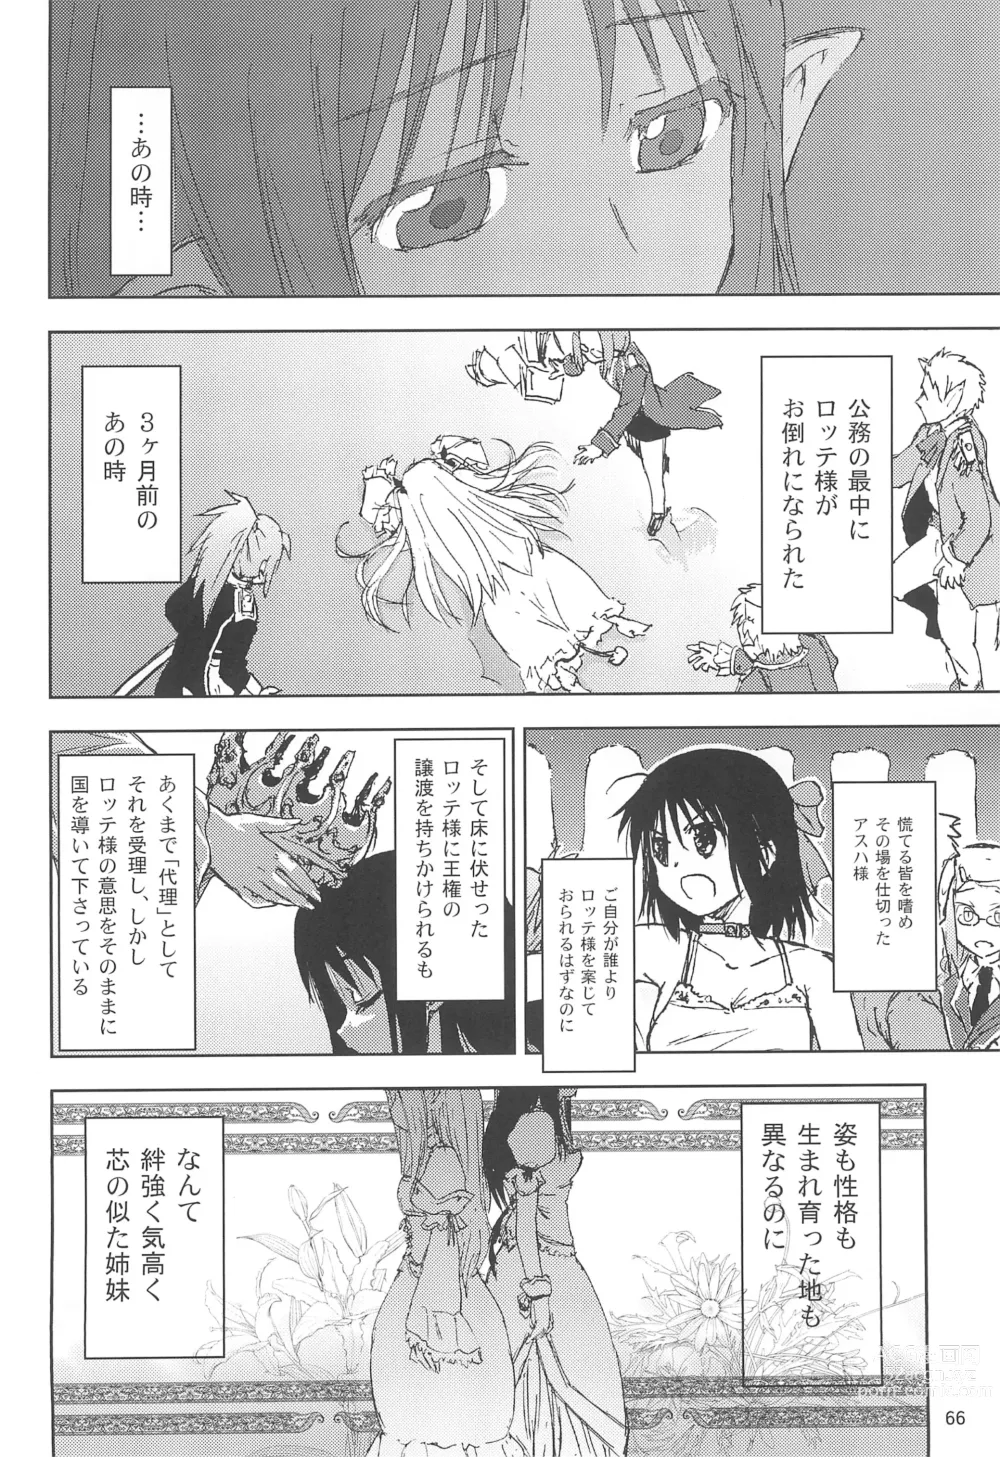 Page 66 of doujinshi Maigo no Maigo no Hime-sama Plus